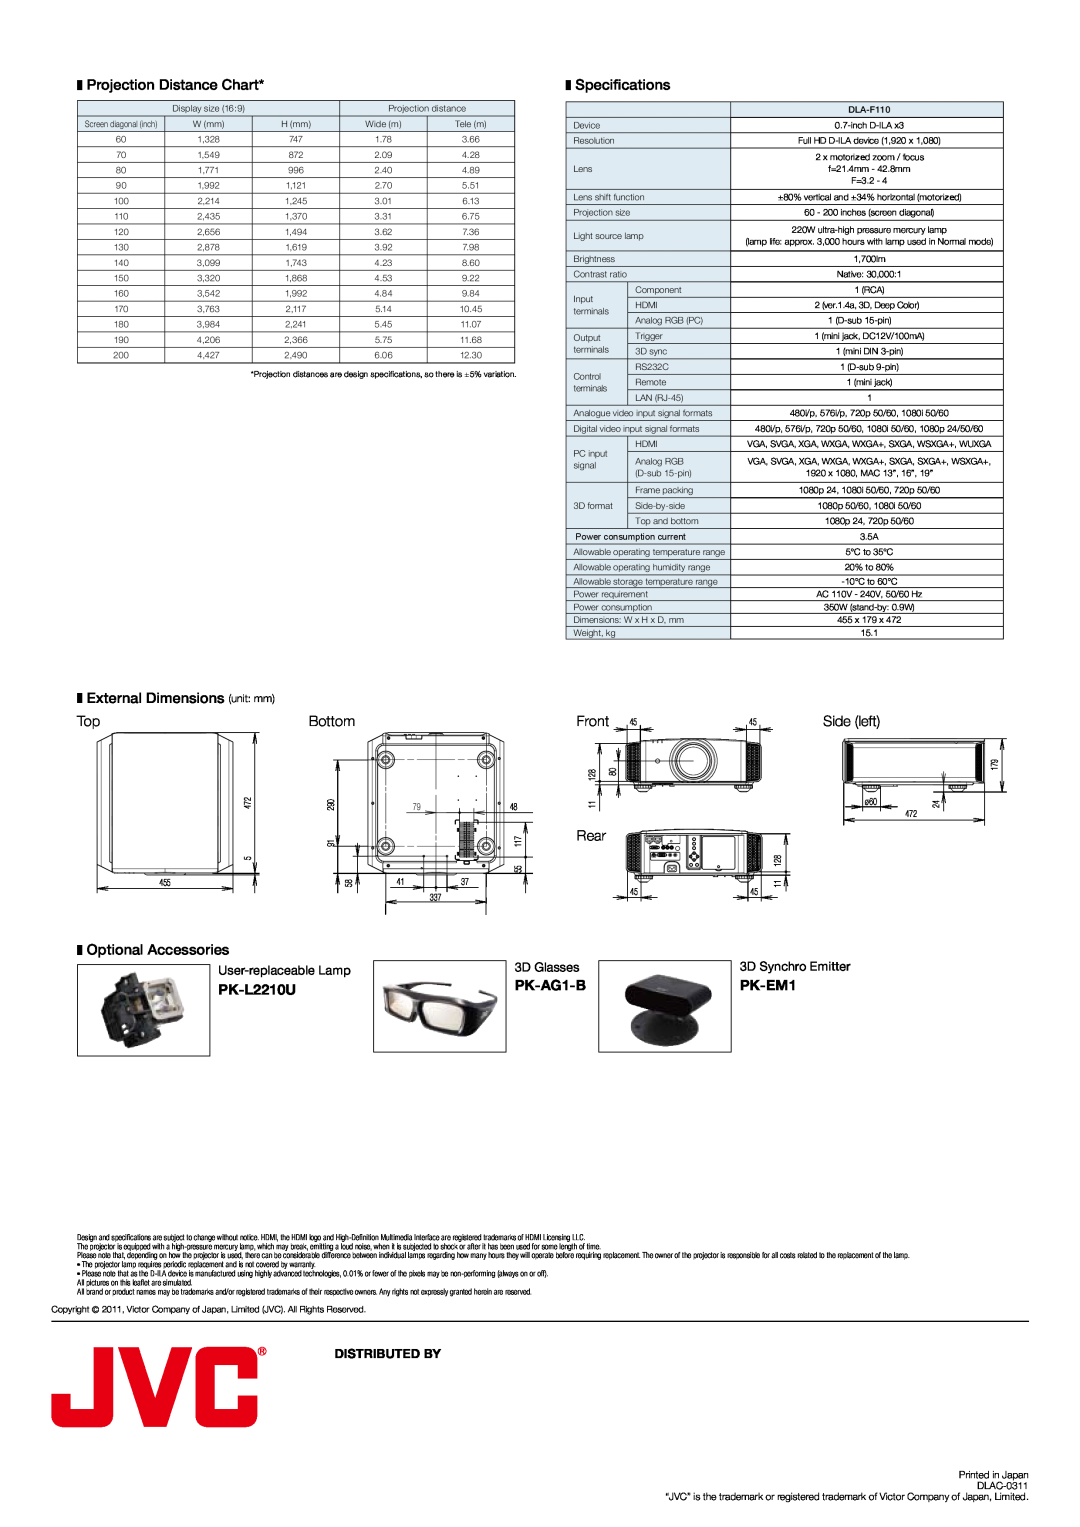 JVC DLA-F110 Projection Distance Chart, Specifications, External Dimensions unit mm, Bottom, Side left, PK-L2210U, PK-EM1 